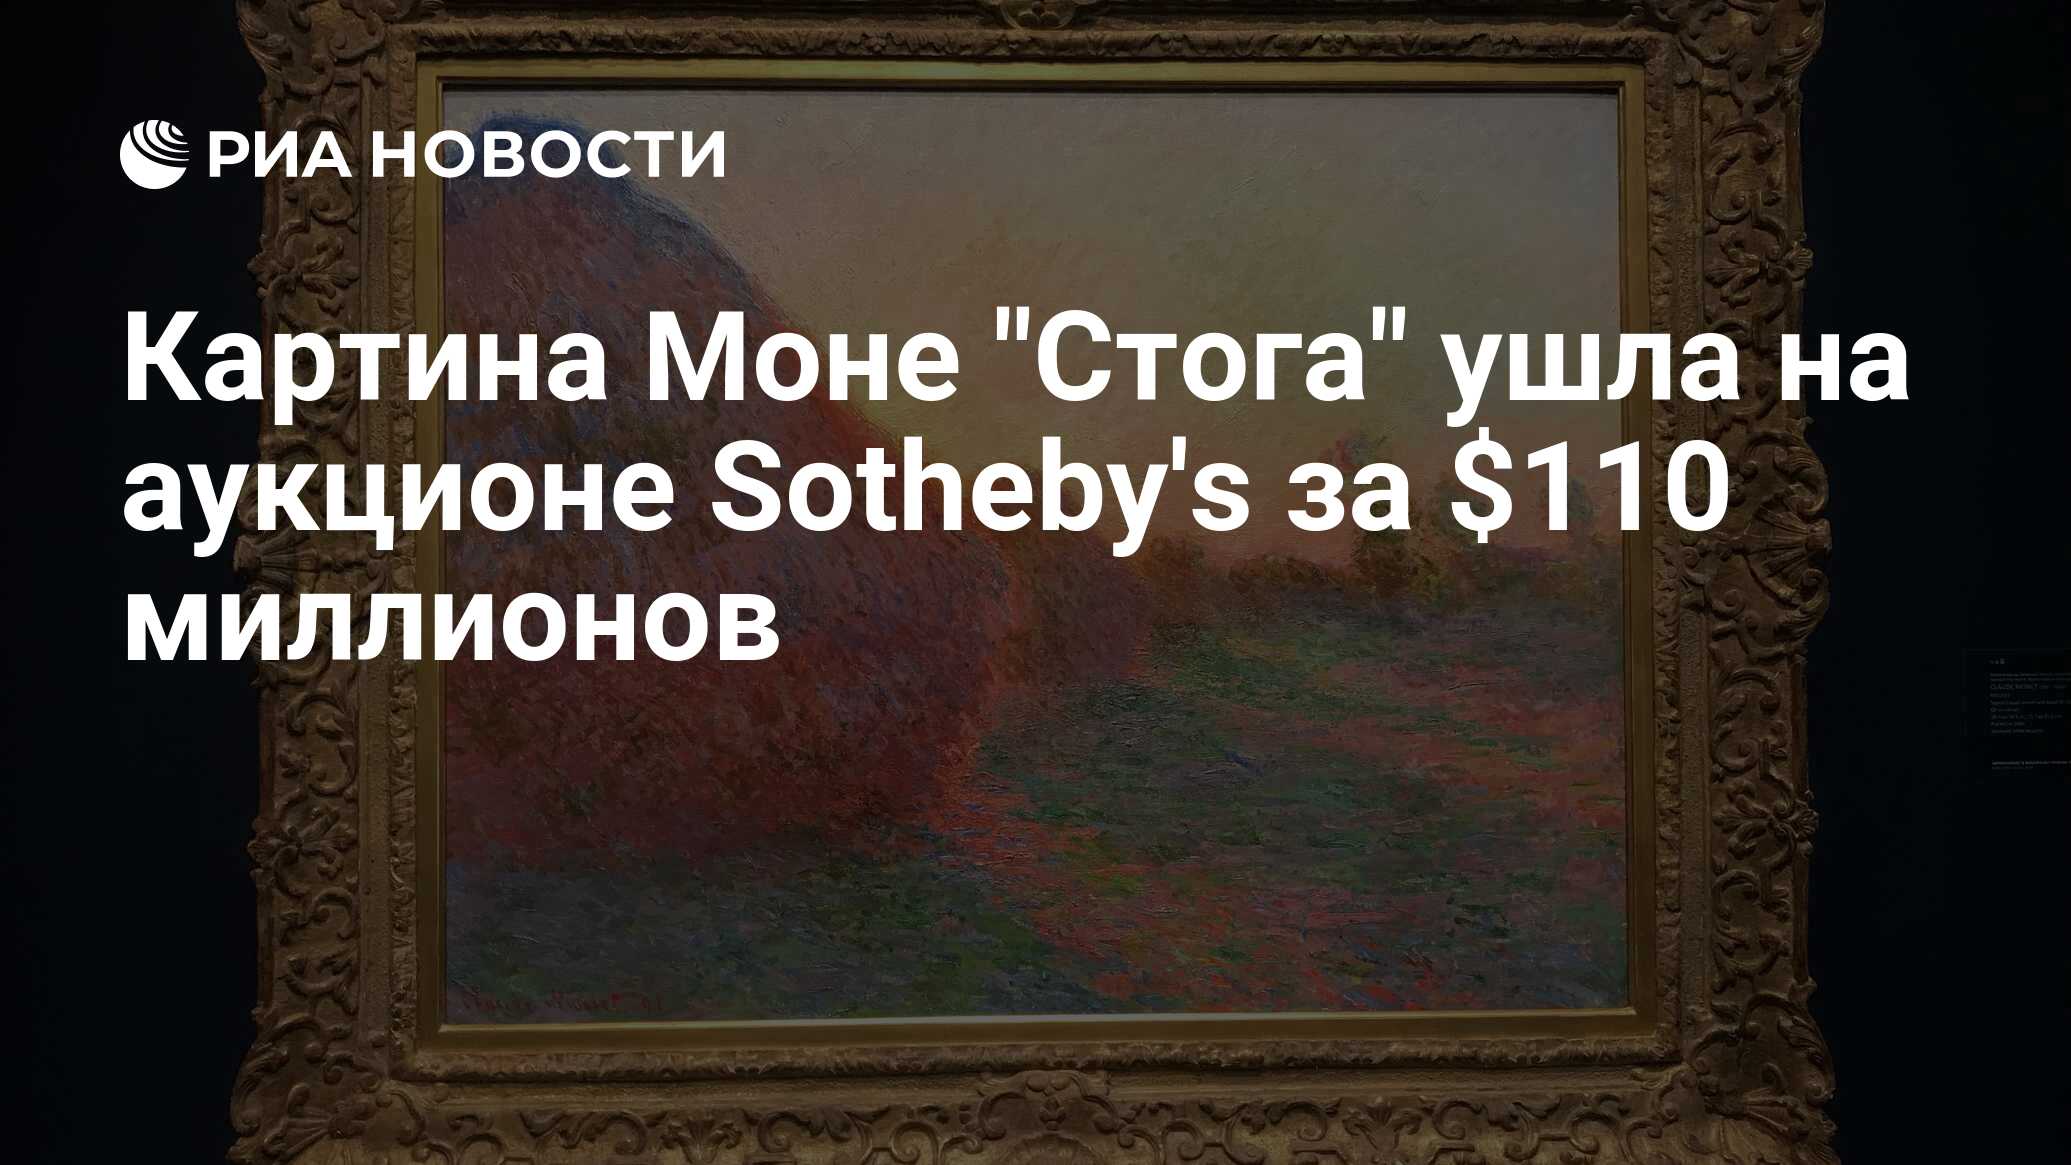 Картина Моне Стога ушла на аукционе Sothebys за $110 миллионов - РИА  Новости, 15.05.2019